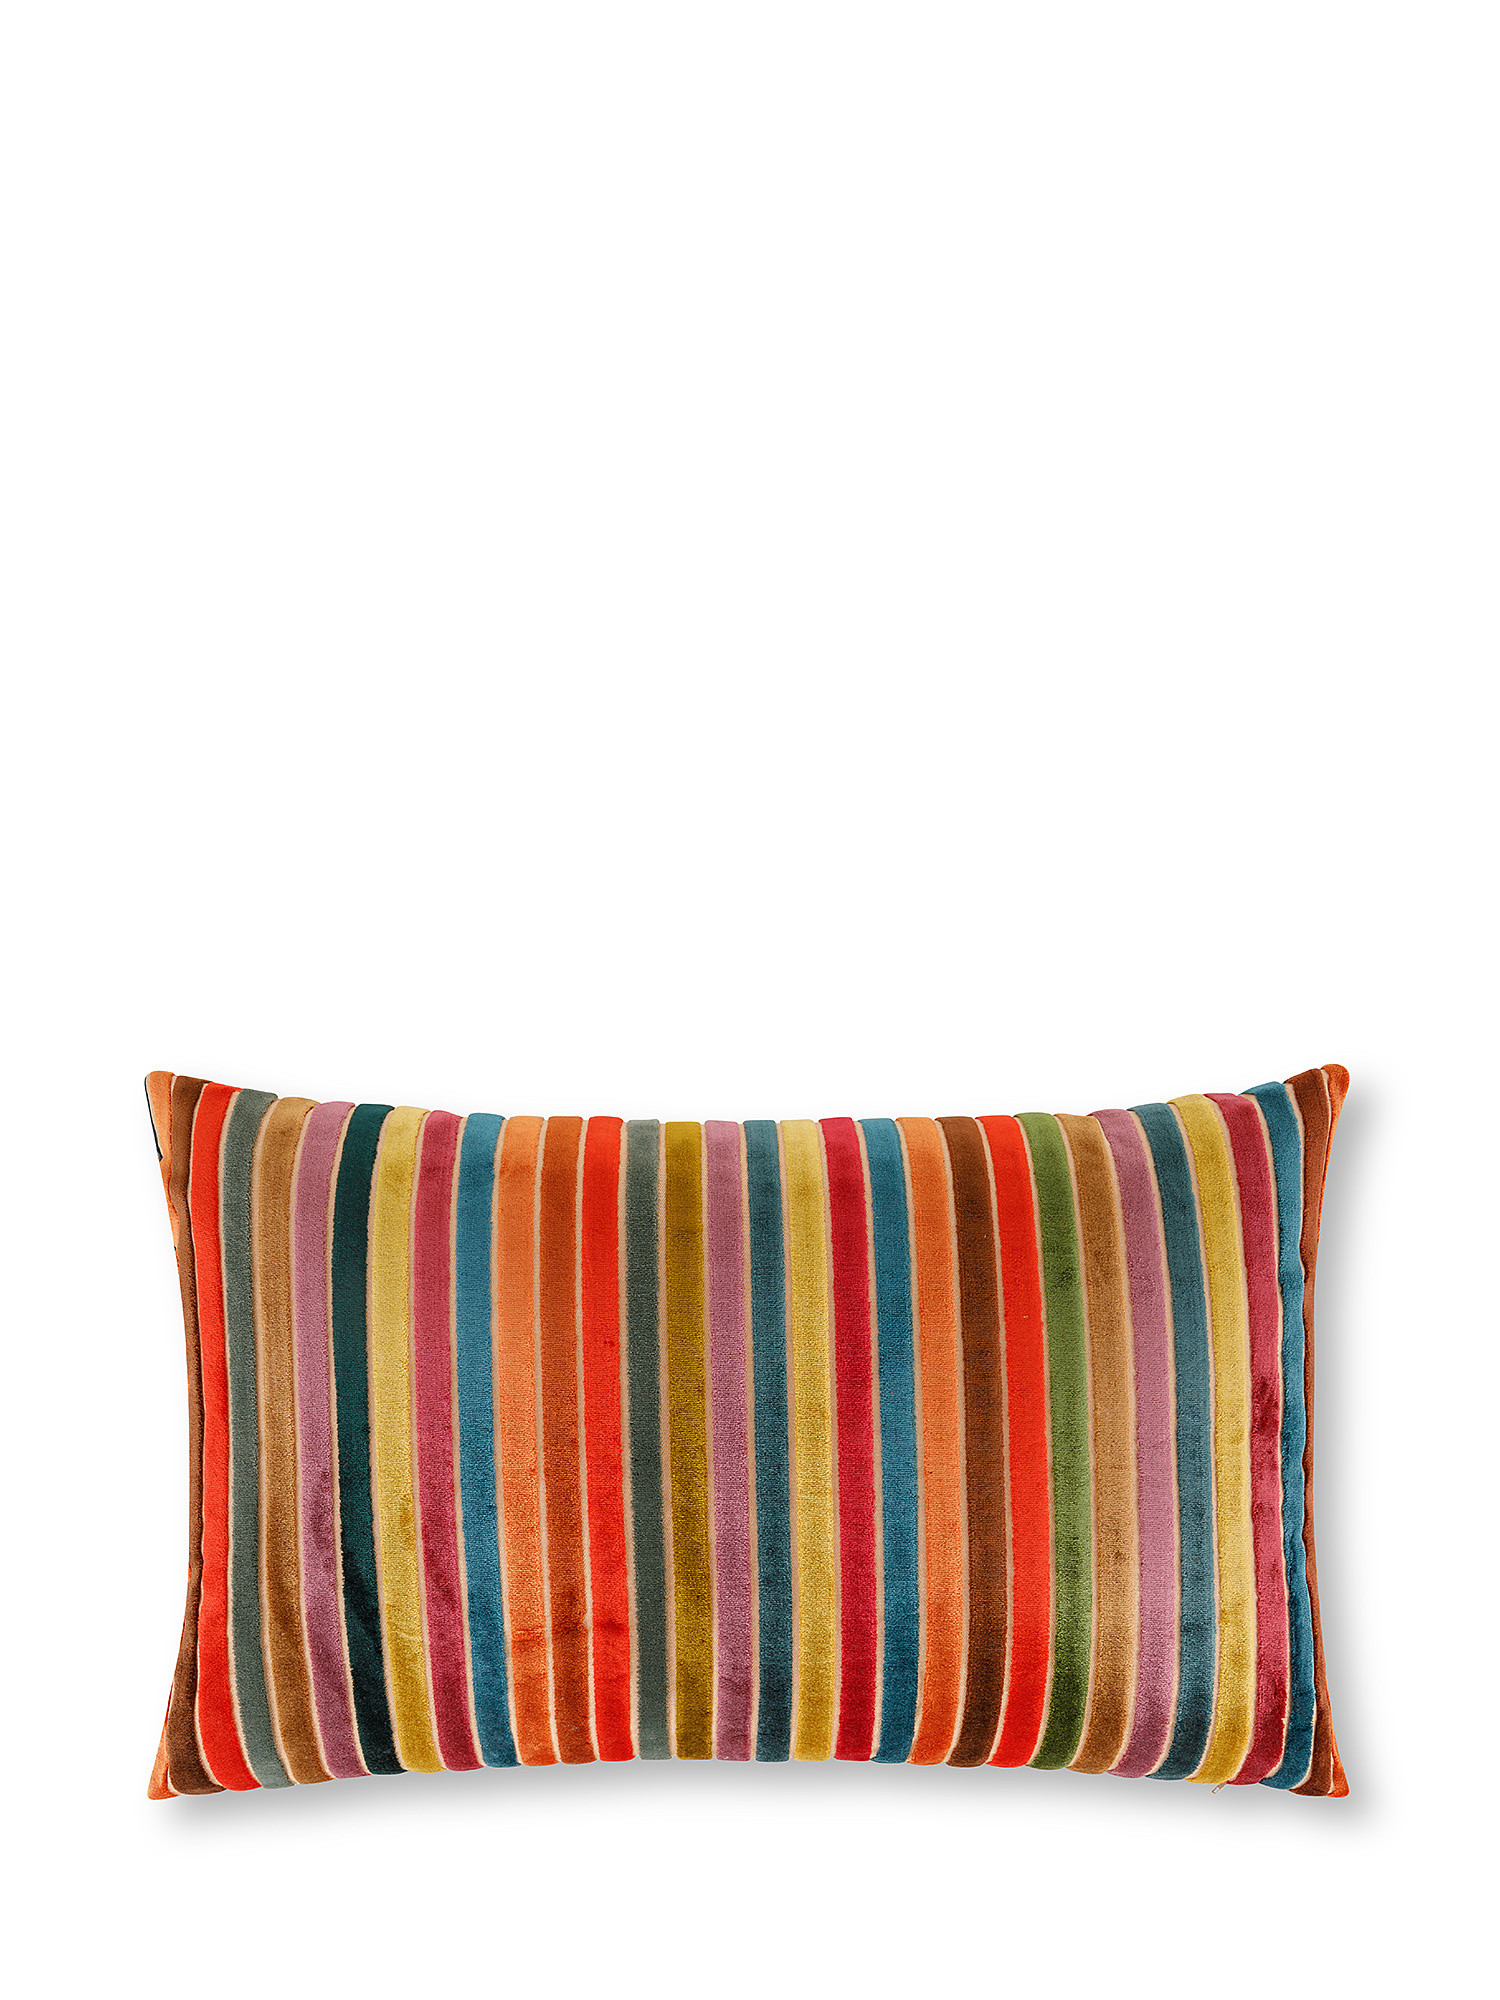 Striped velvet cushion 35x55cm, Multicolor, large image number 1